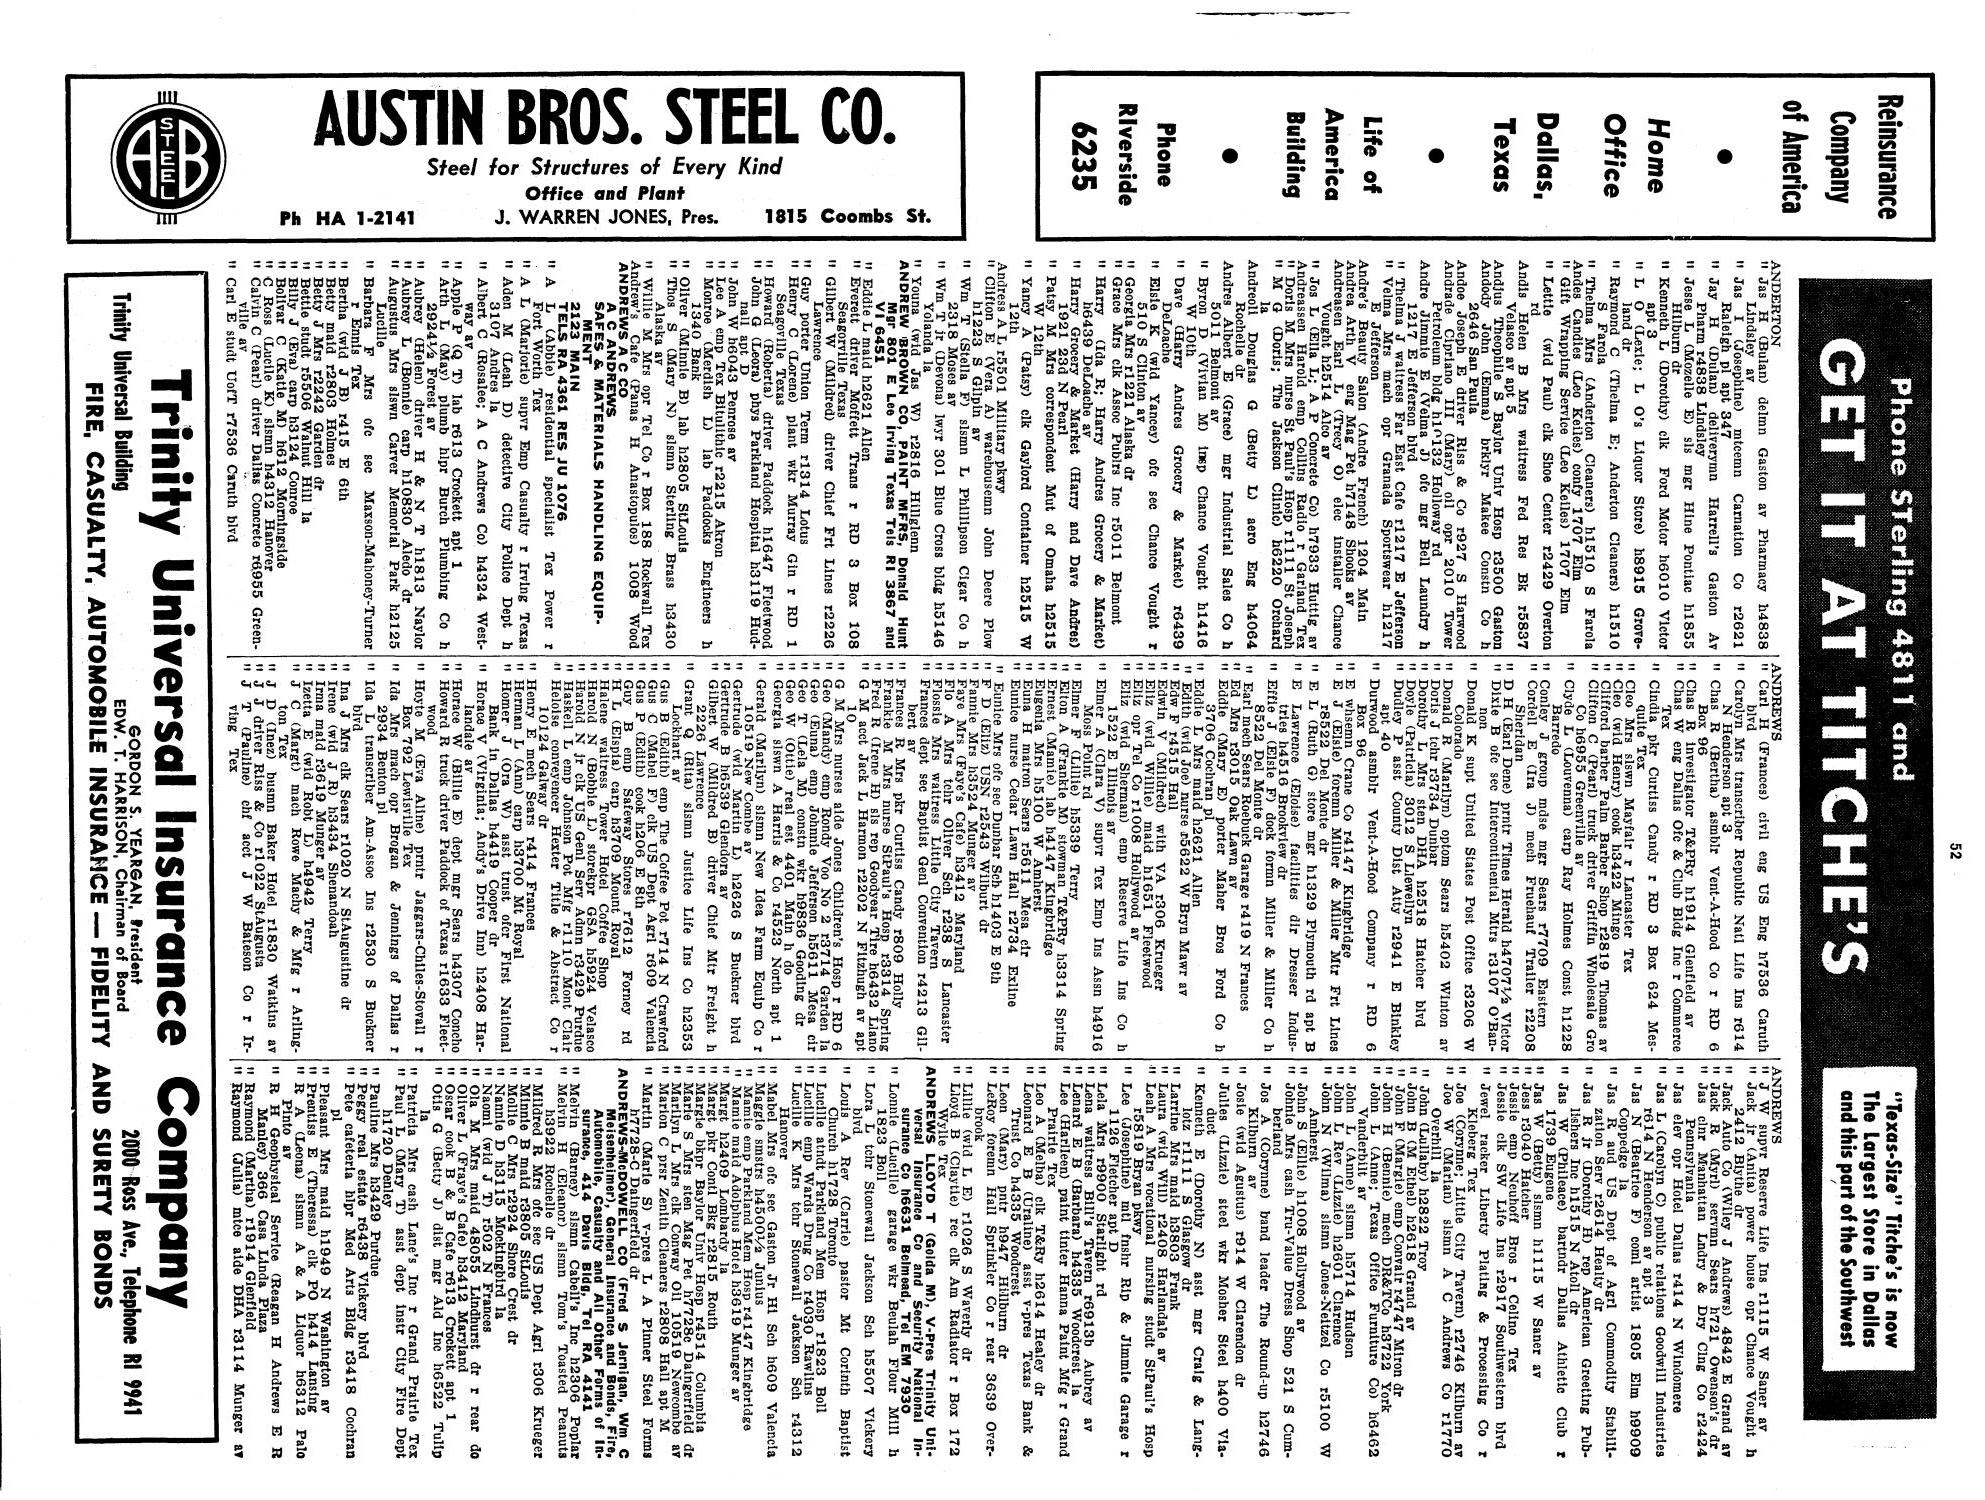 Dallas City Directory, 1956
                                                
                                                    52
                                                